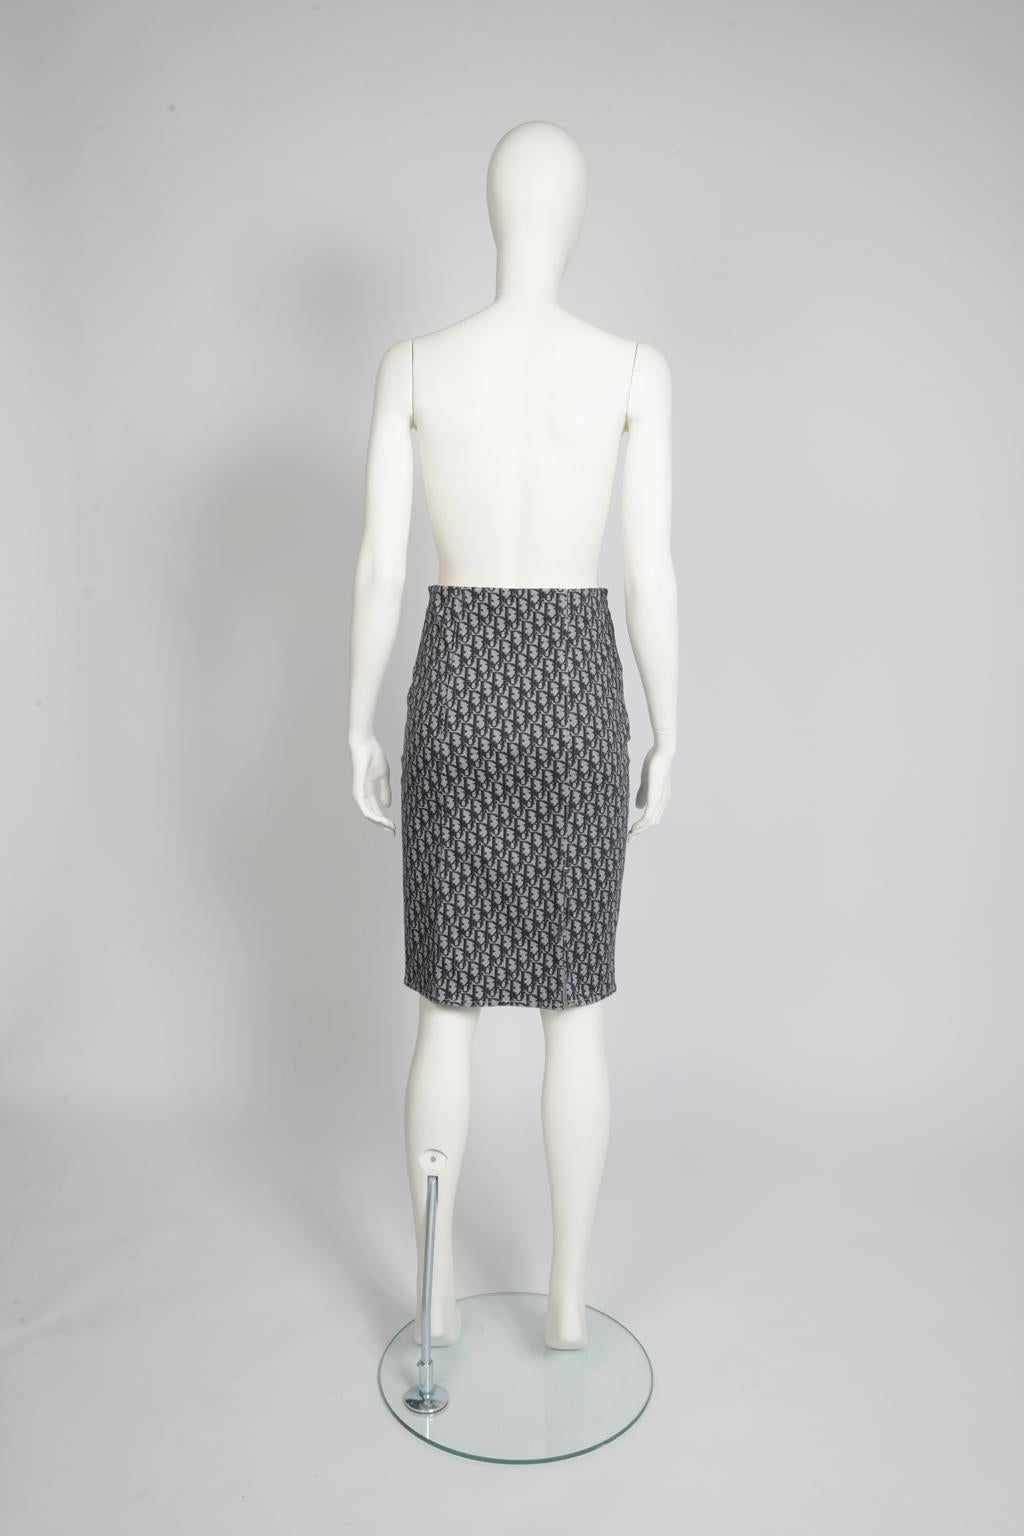 Christian Dior By John Galliano Dior Oblique Pencil Skirt 1